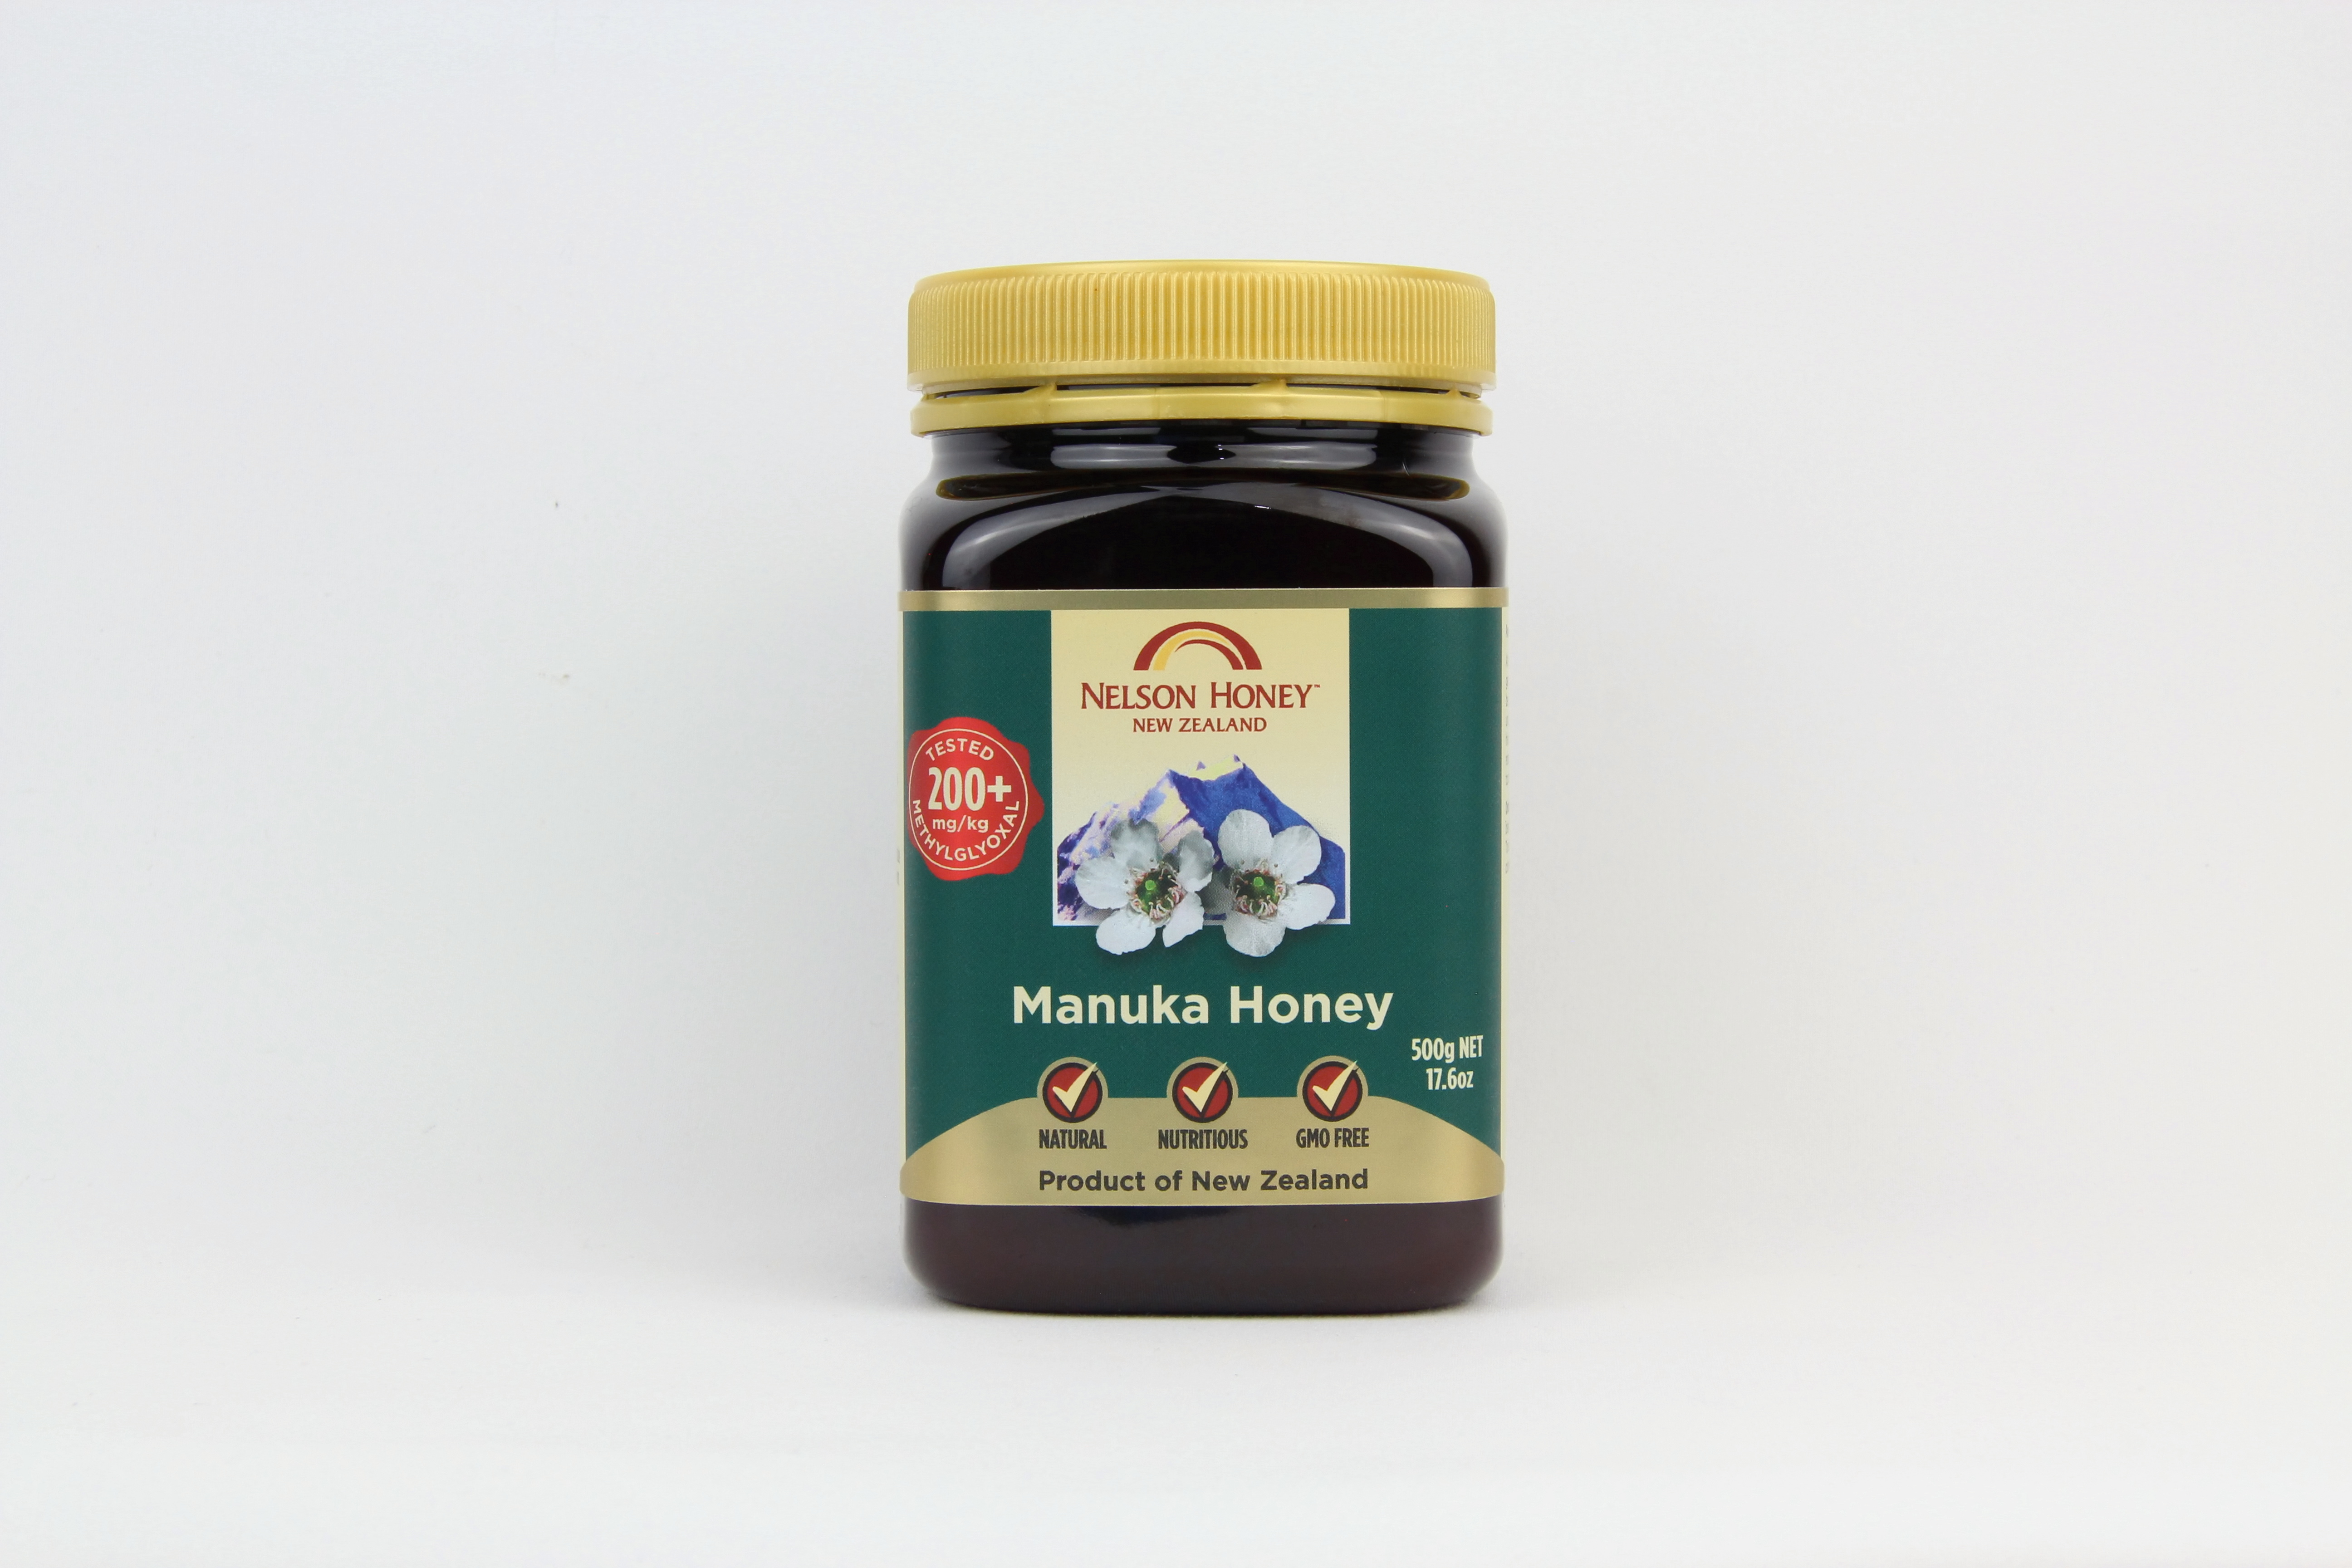 Nelson Honey New Zealand Manuka Honey 200+ 500g